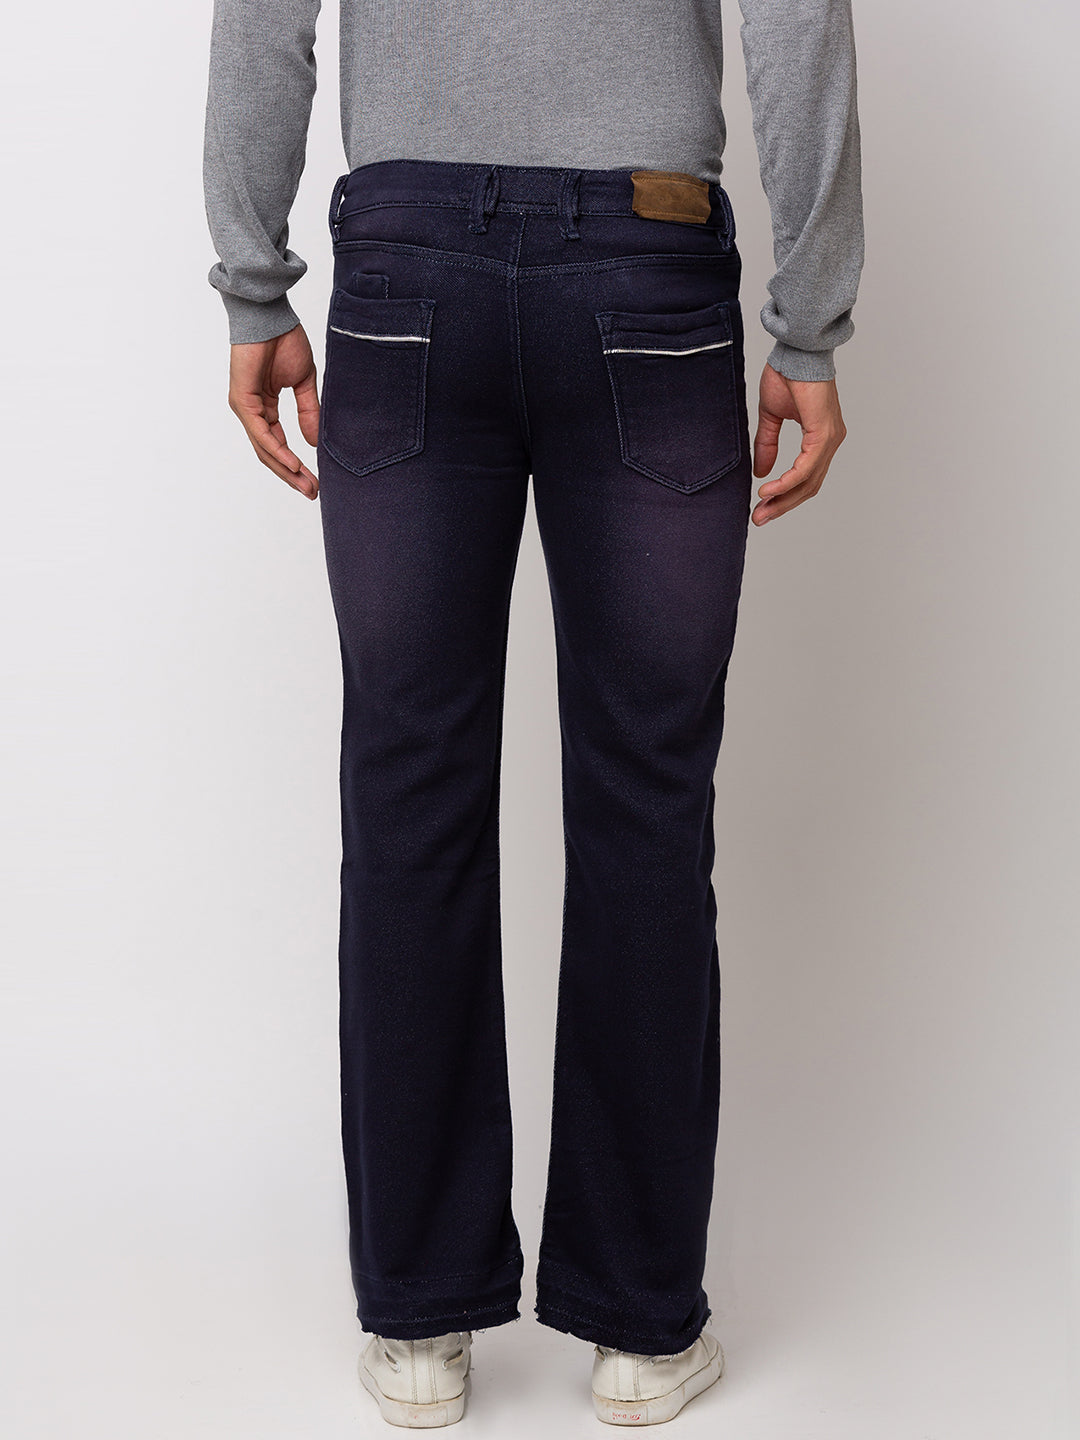 Men's Navy Blue Bootcut Jeans